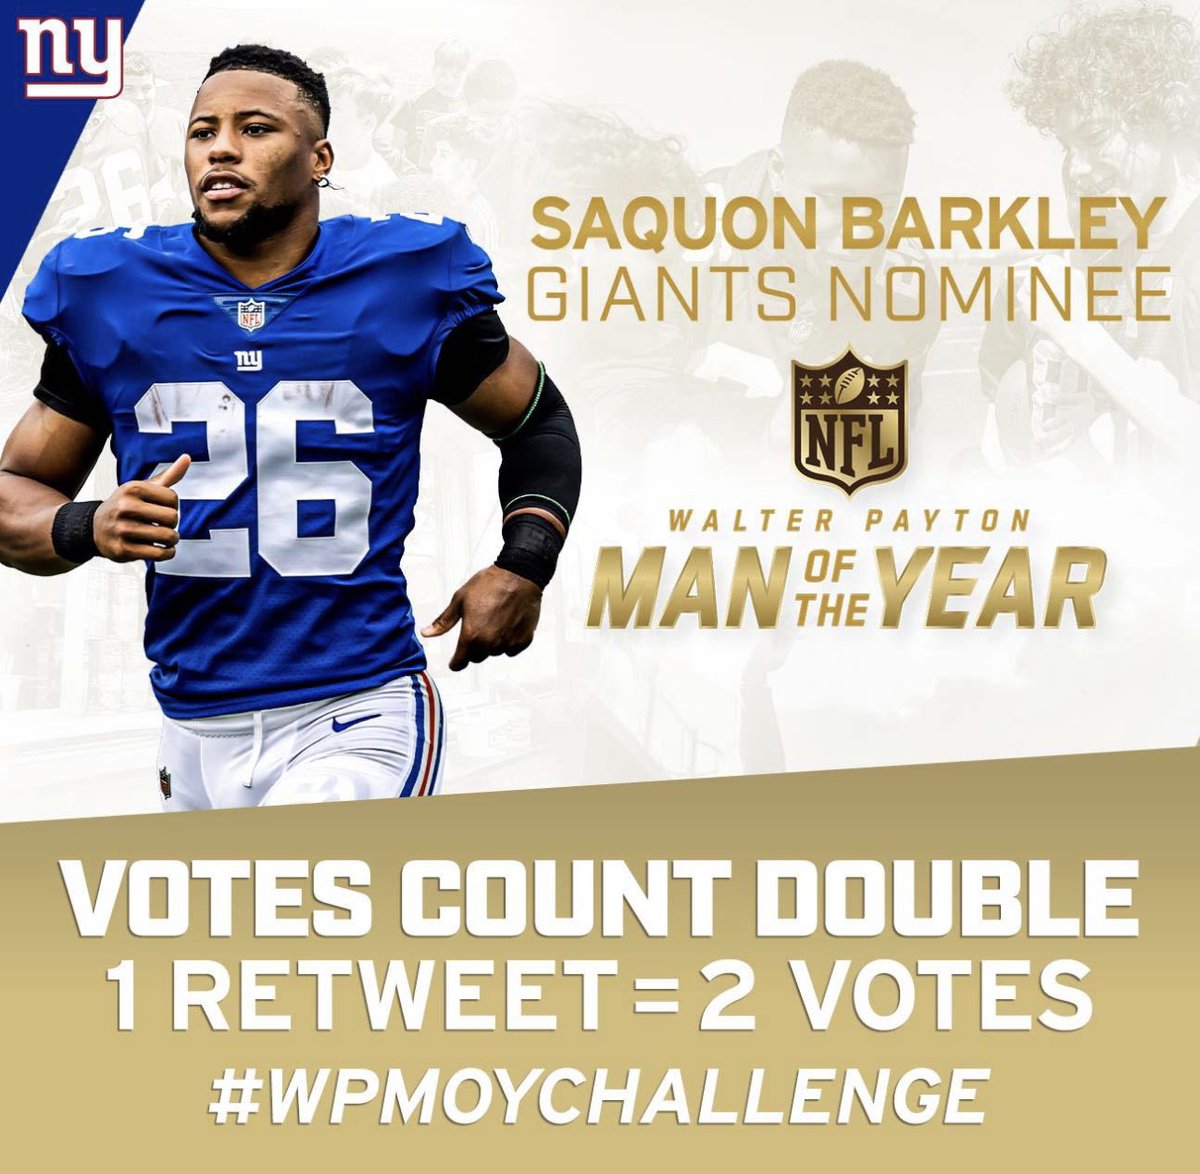 RT to help @saquon win the WPMOY Charity Challenge‼️ 1 RT = TWO VOTES #WPMOYChallenge + Barkley